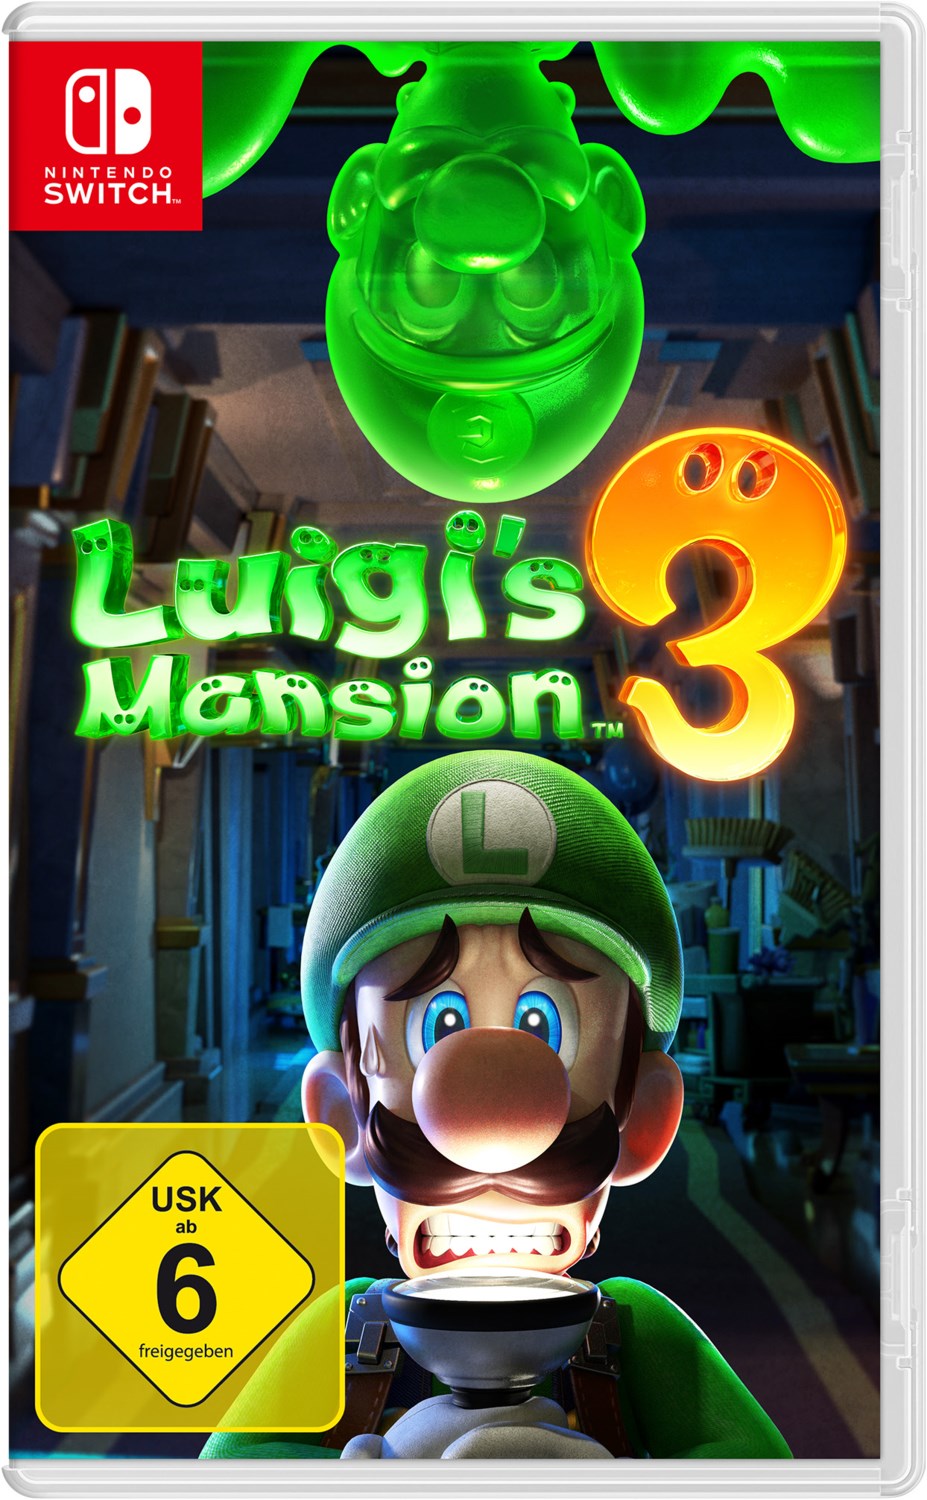 Nintendo Luigis Mansion 3